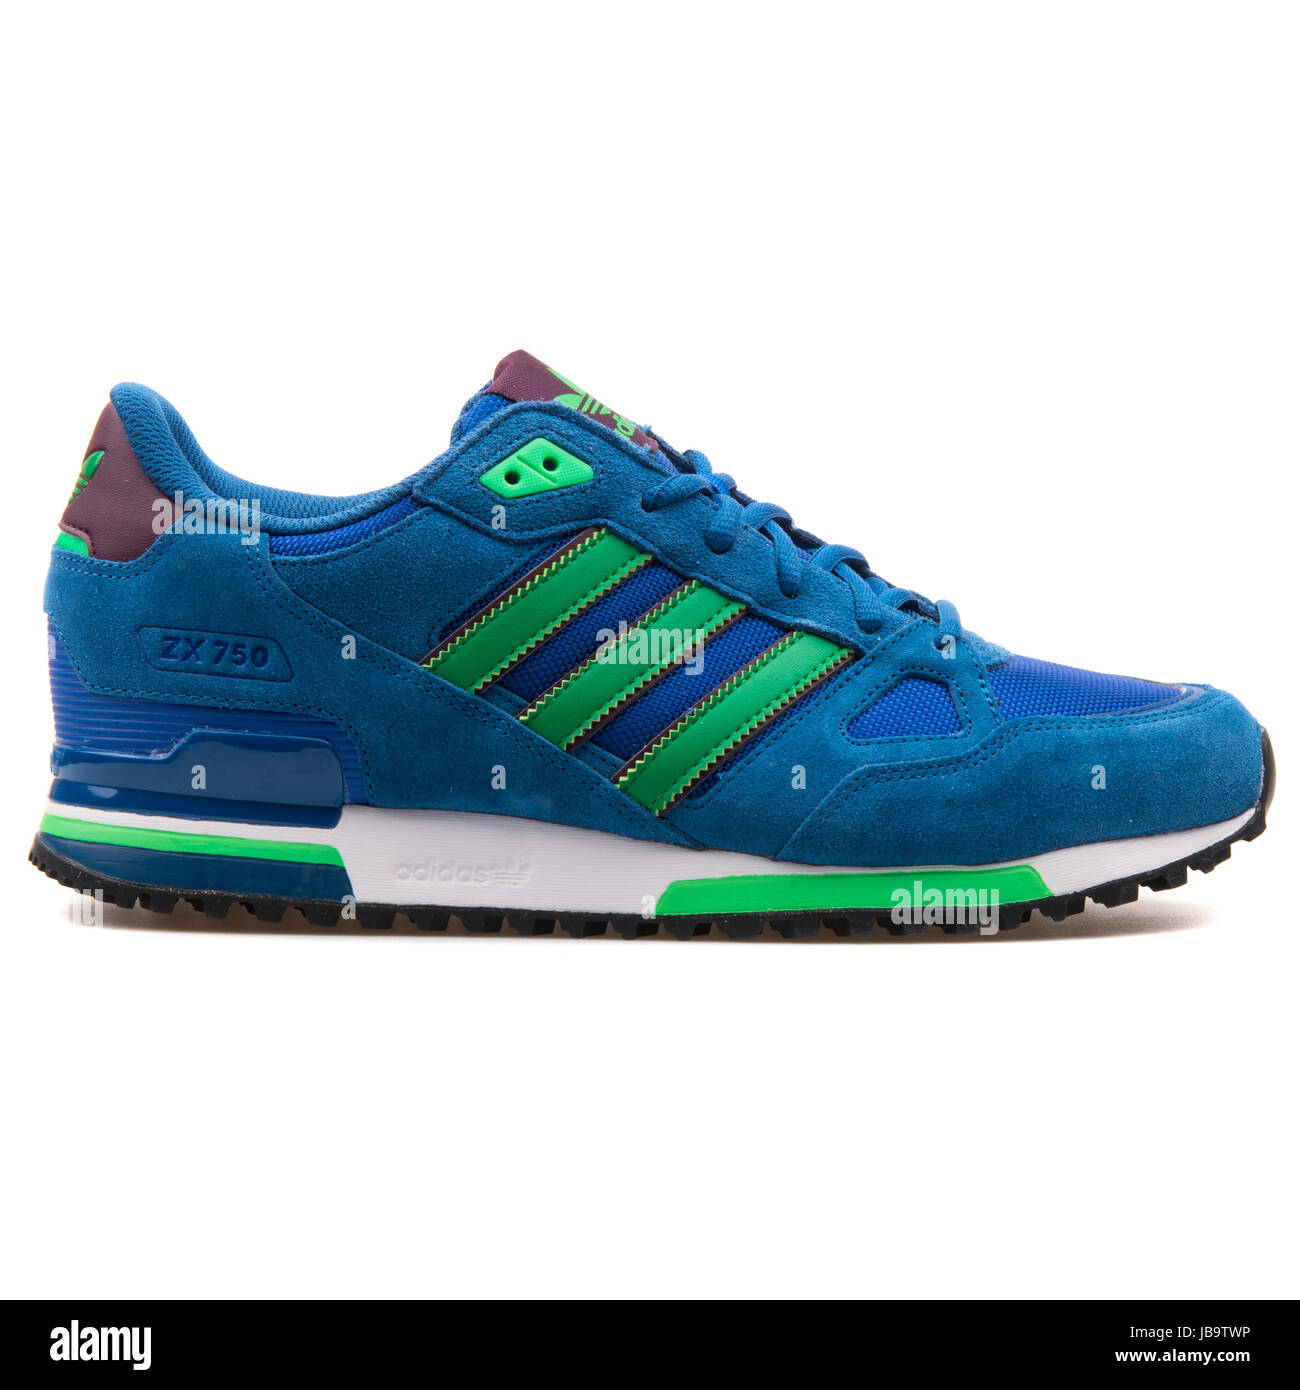 Adidas ZX 750 Blu e Verde uomini Sport Sneakers - B24857 Foto stock - Alamy